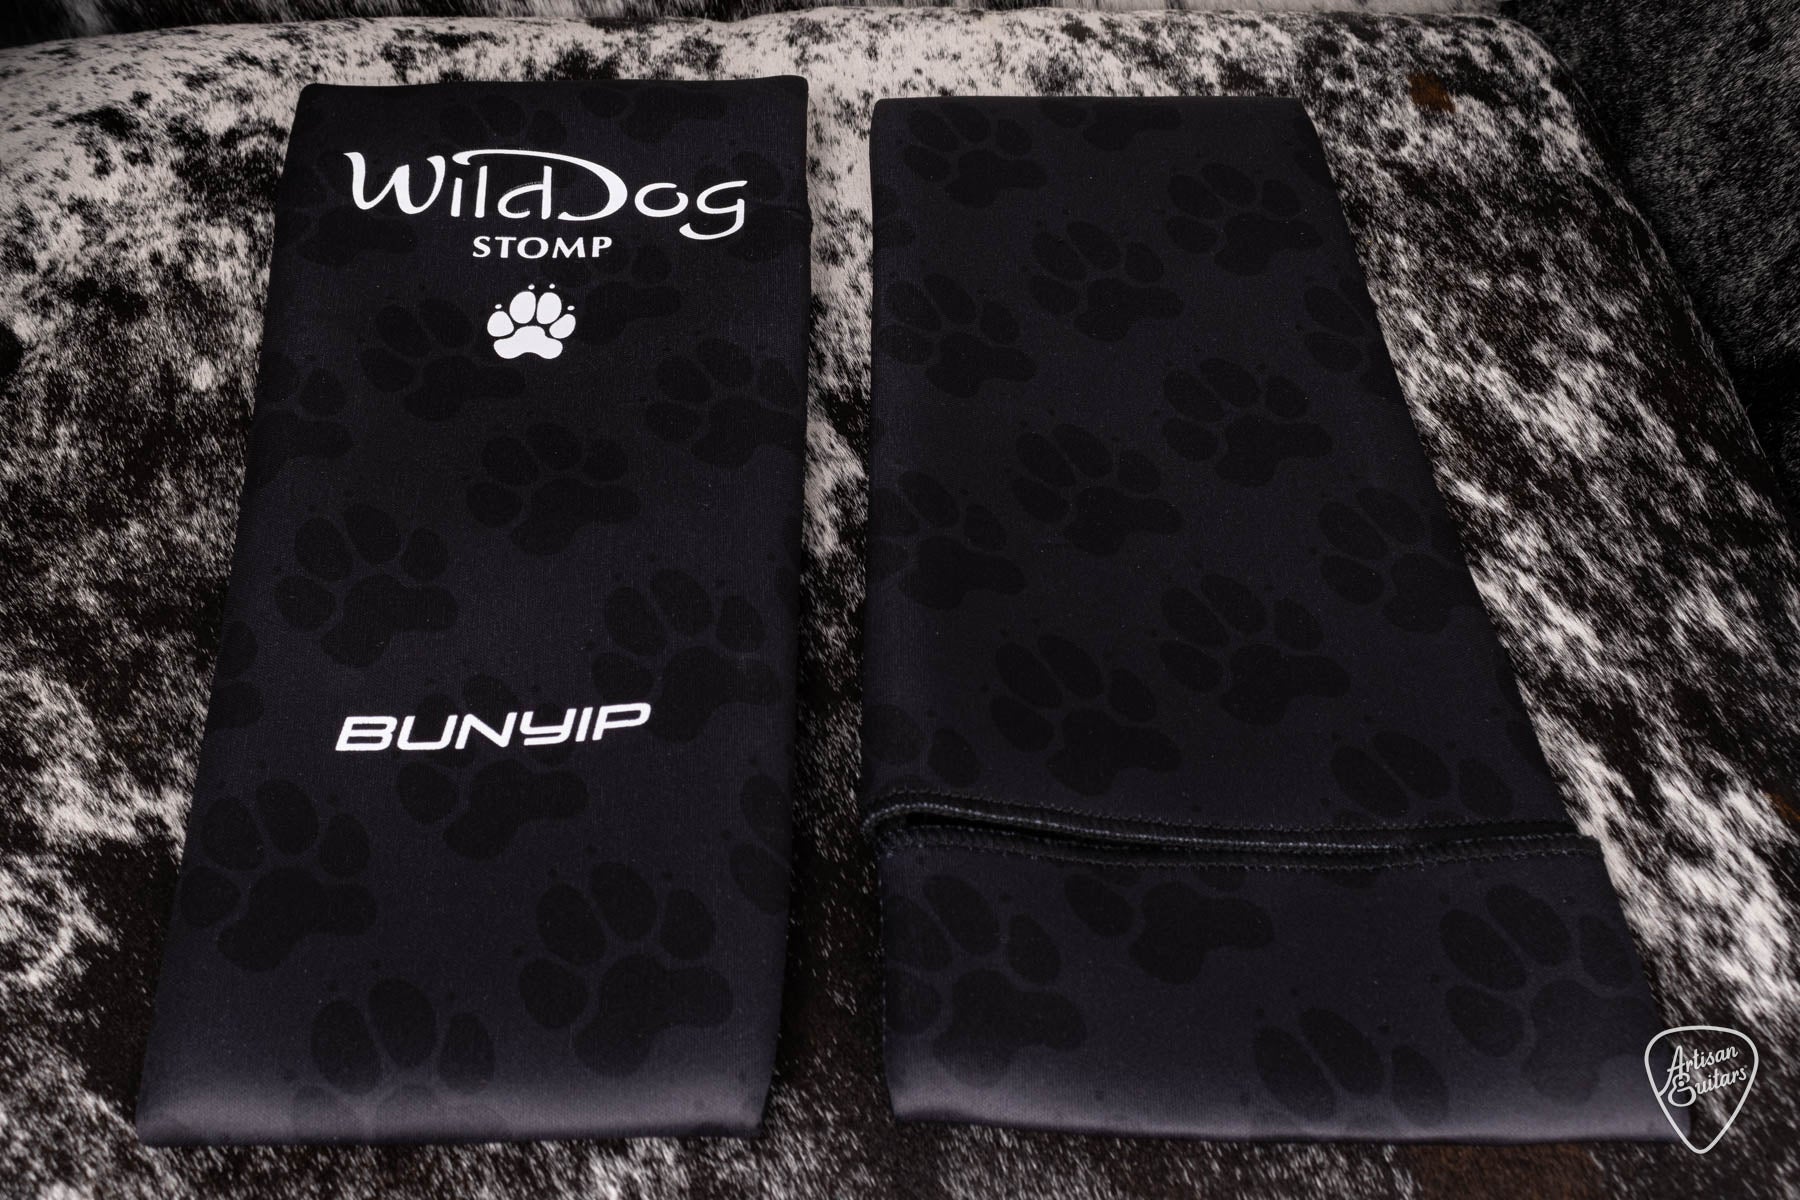 Wild Dog Bunyip Stomp Box - WD-141223